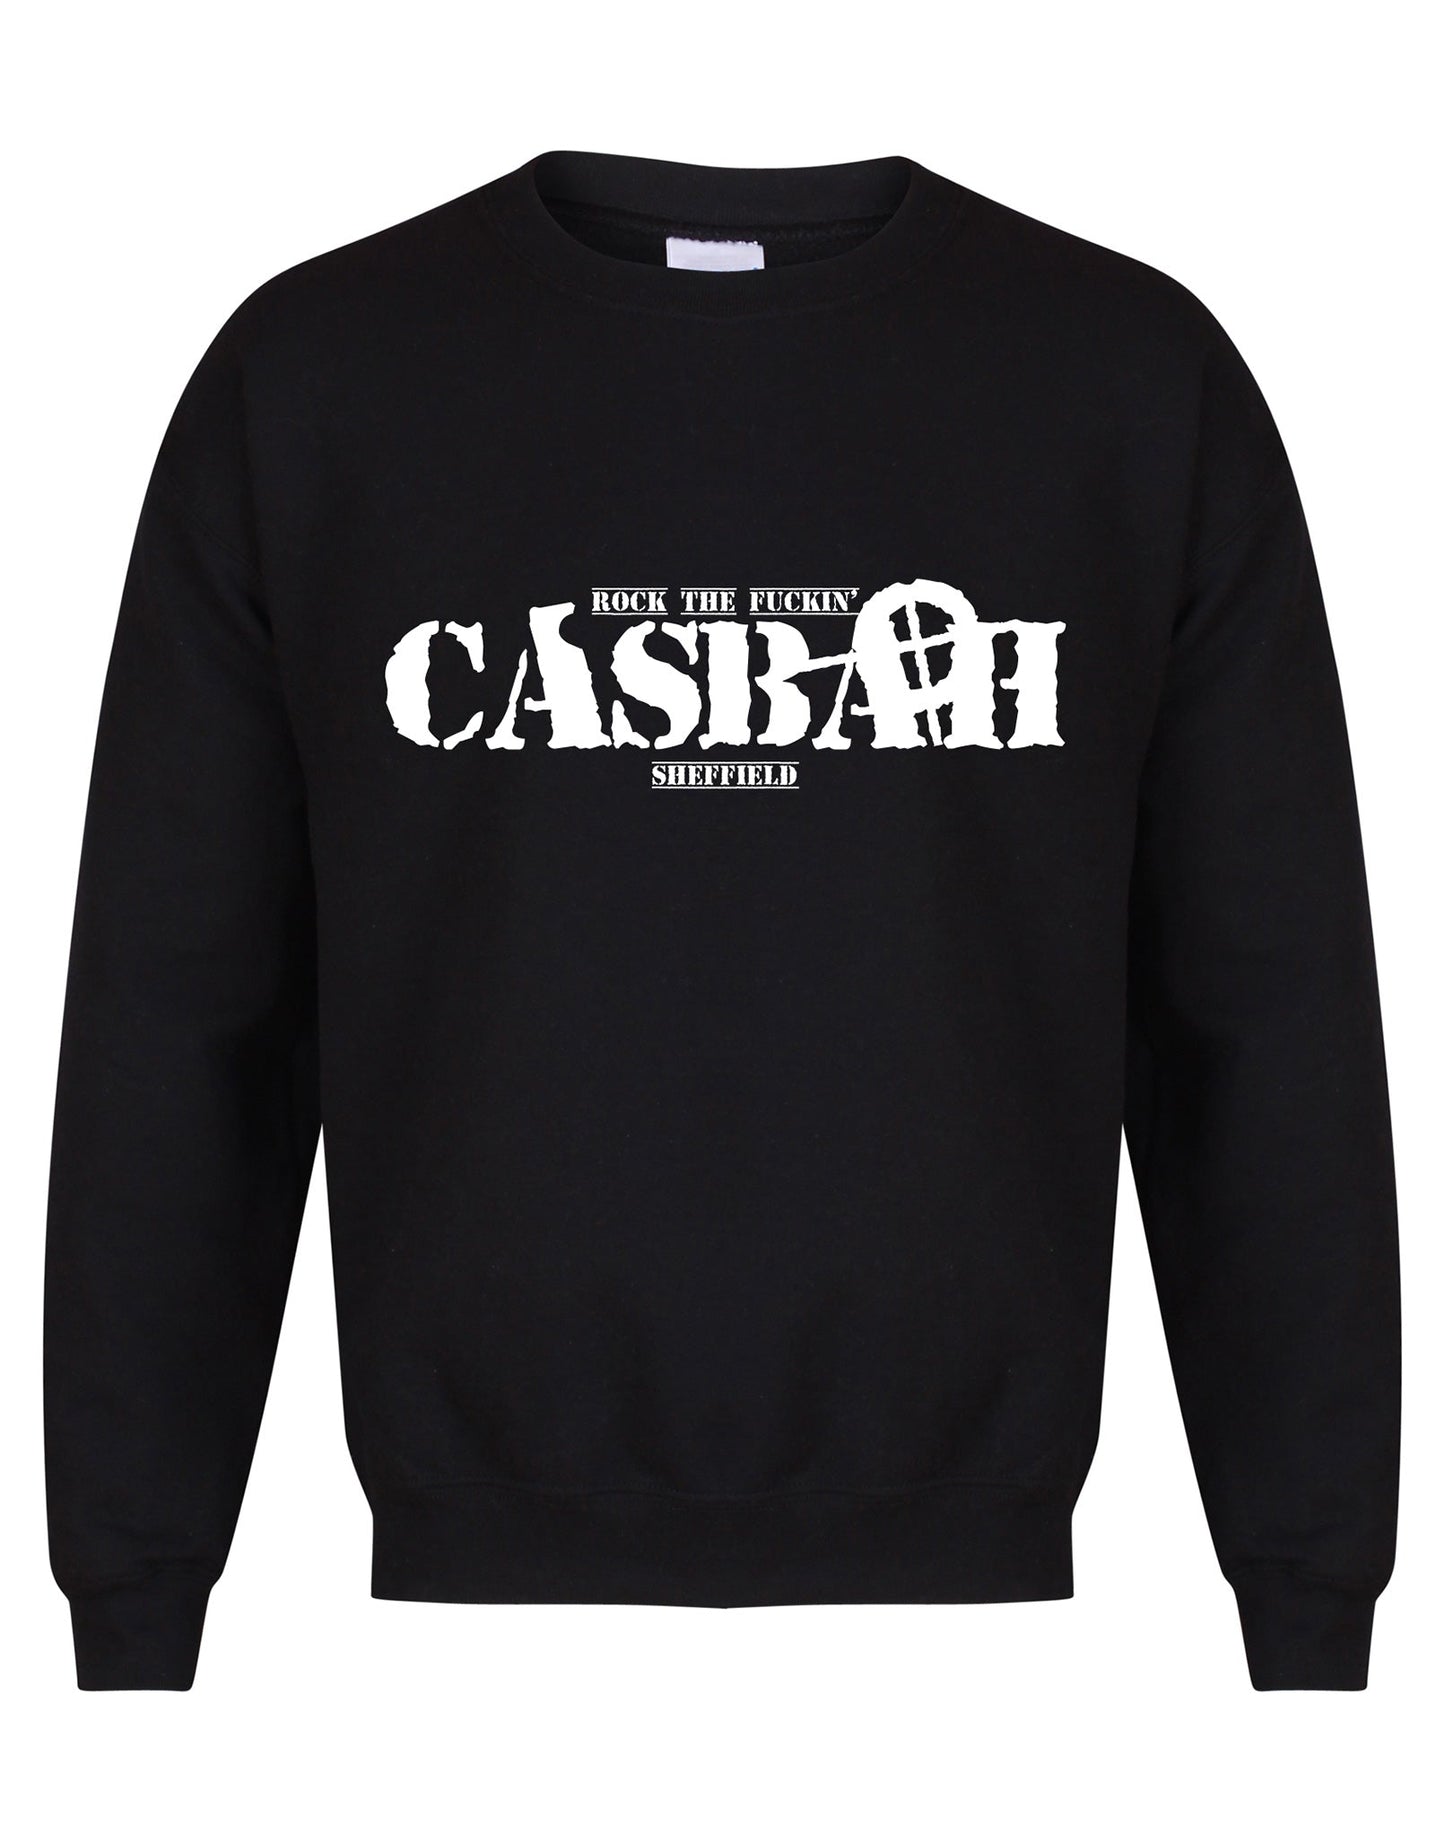 Casbah unisex fit sweatshirt - various colours - Dirty Stop Outs